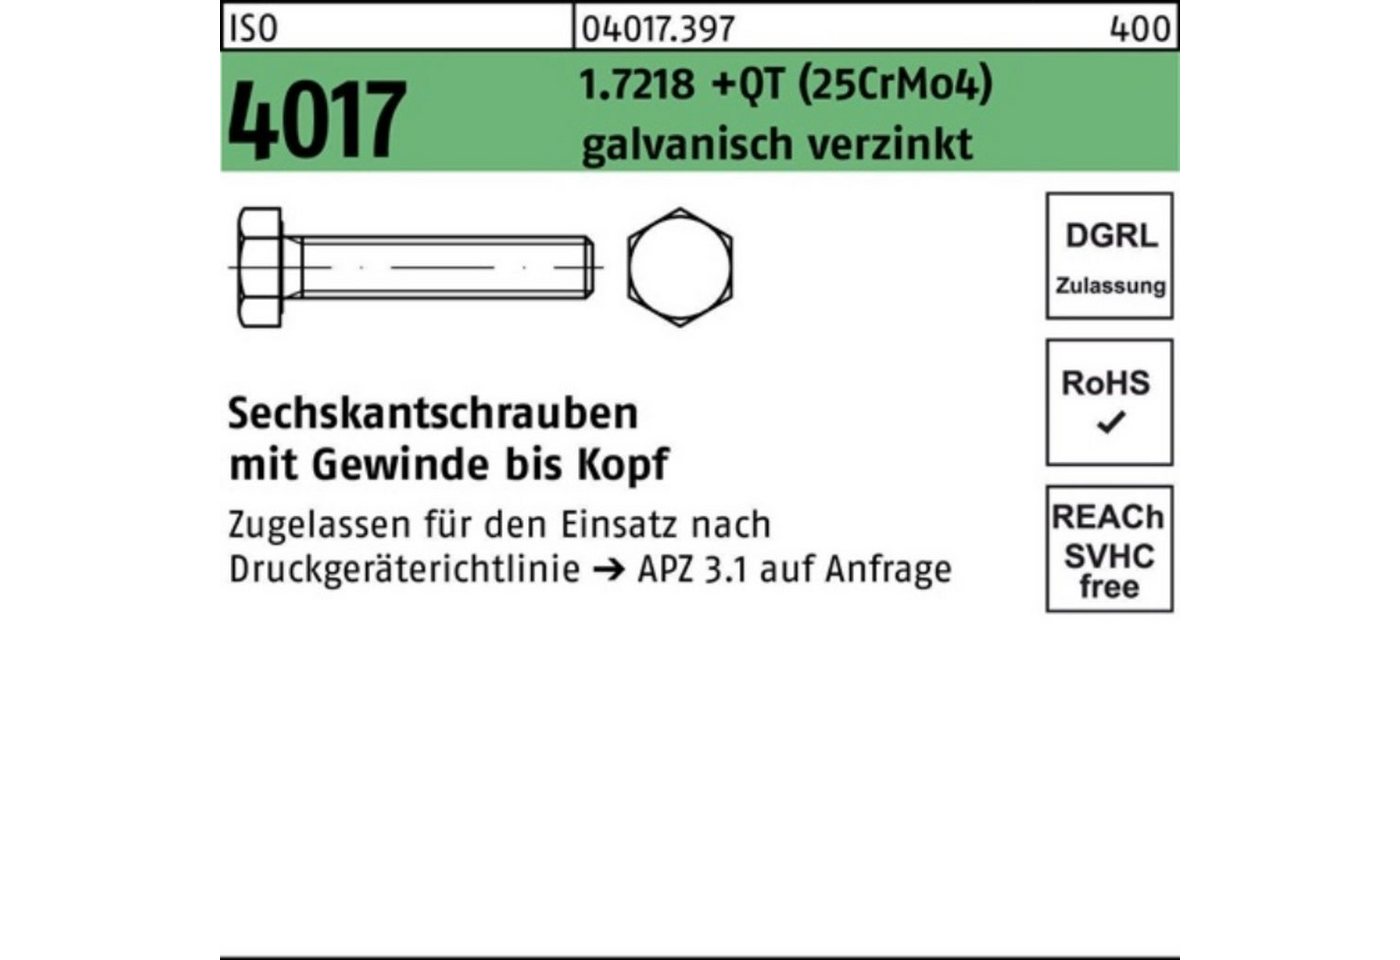 Bufab Sechskantschraube 100er Pack Sechskantschraube ISO 4017 VG M24x120 1.7218 +QT (25CrMo4) von Bufab